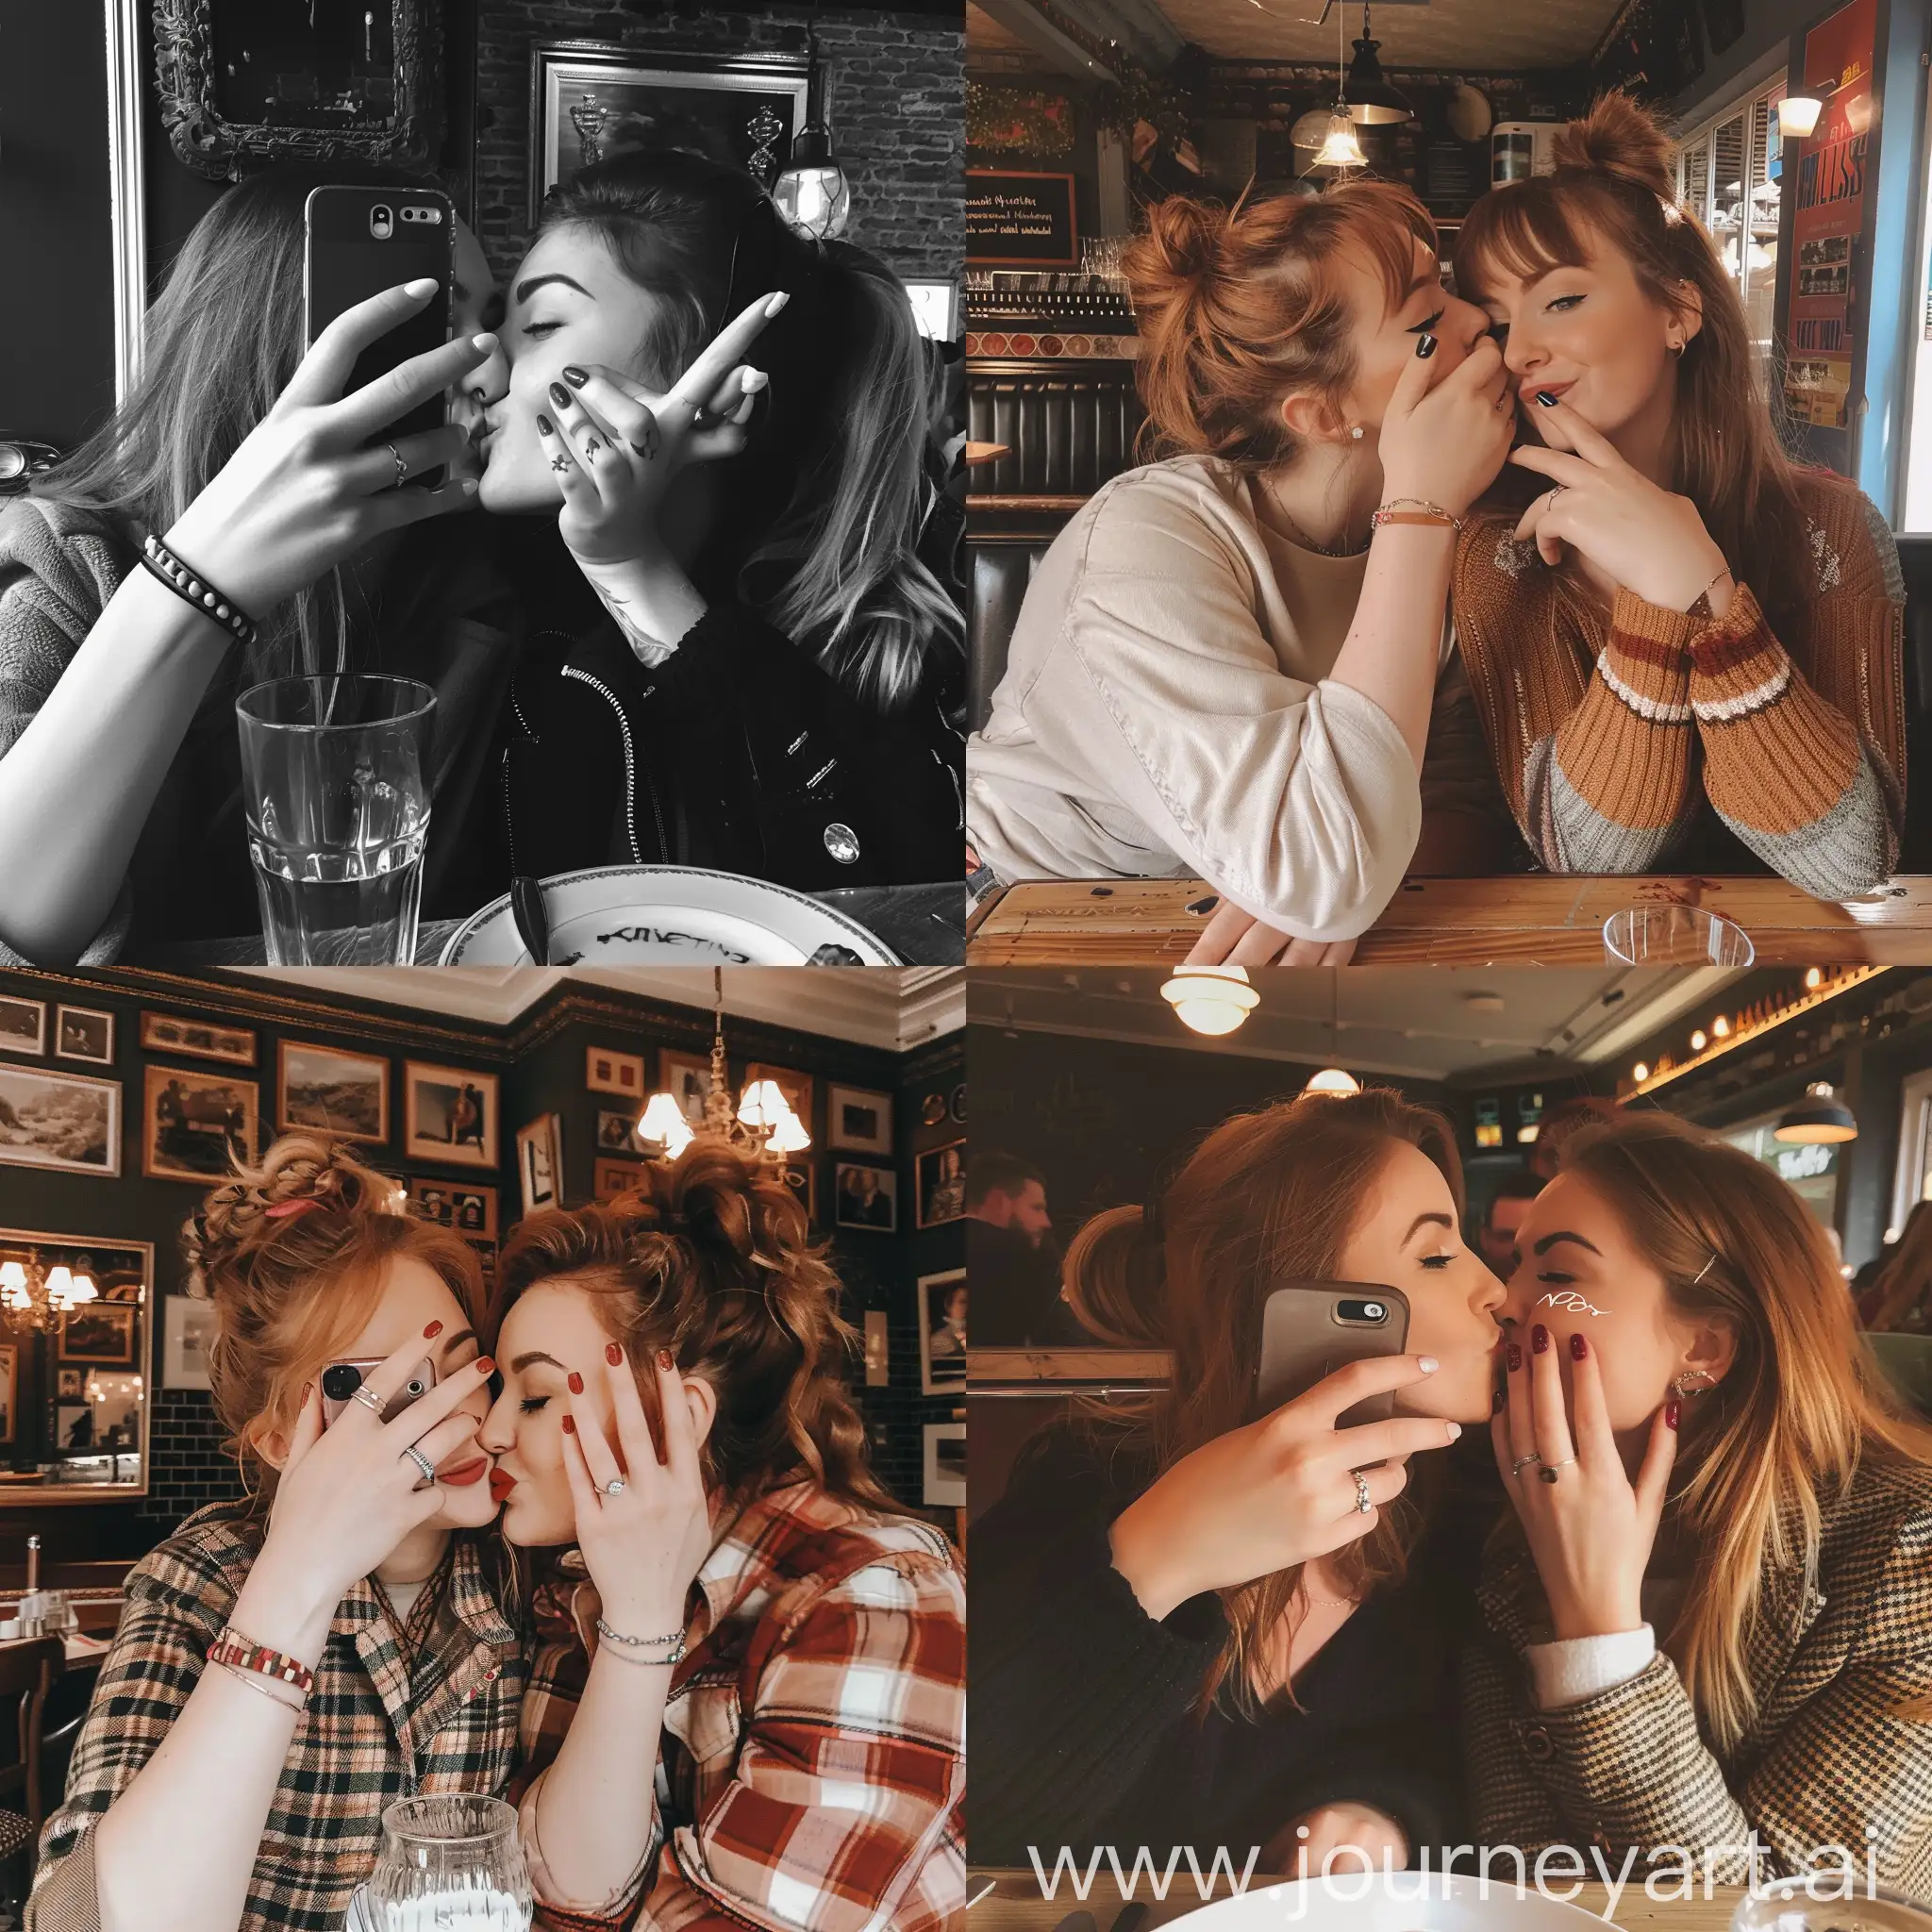 Scottish-Couple-Sharing-a-Tender-Moment-in-Restaurant-Selfie